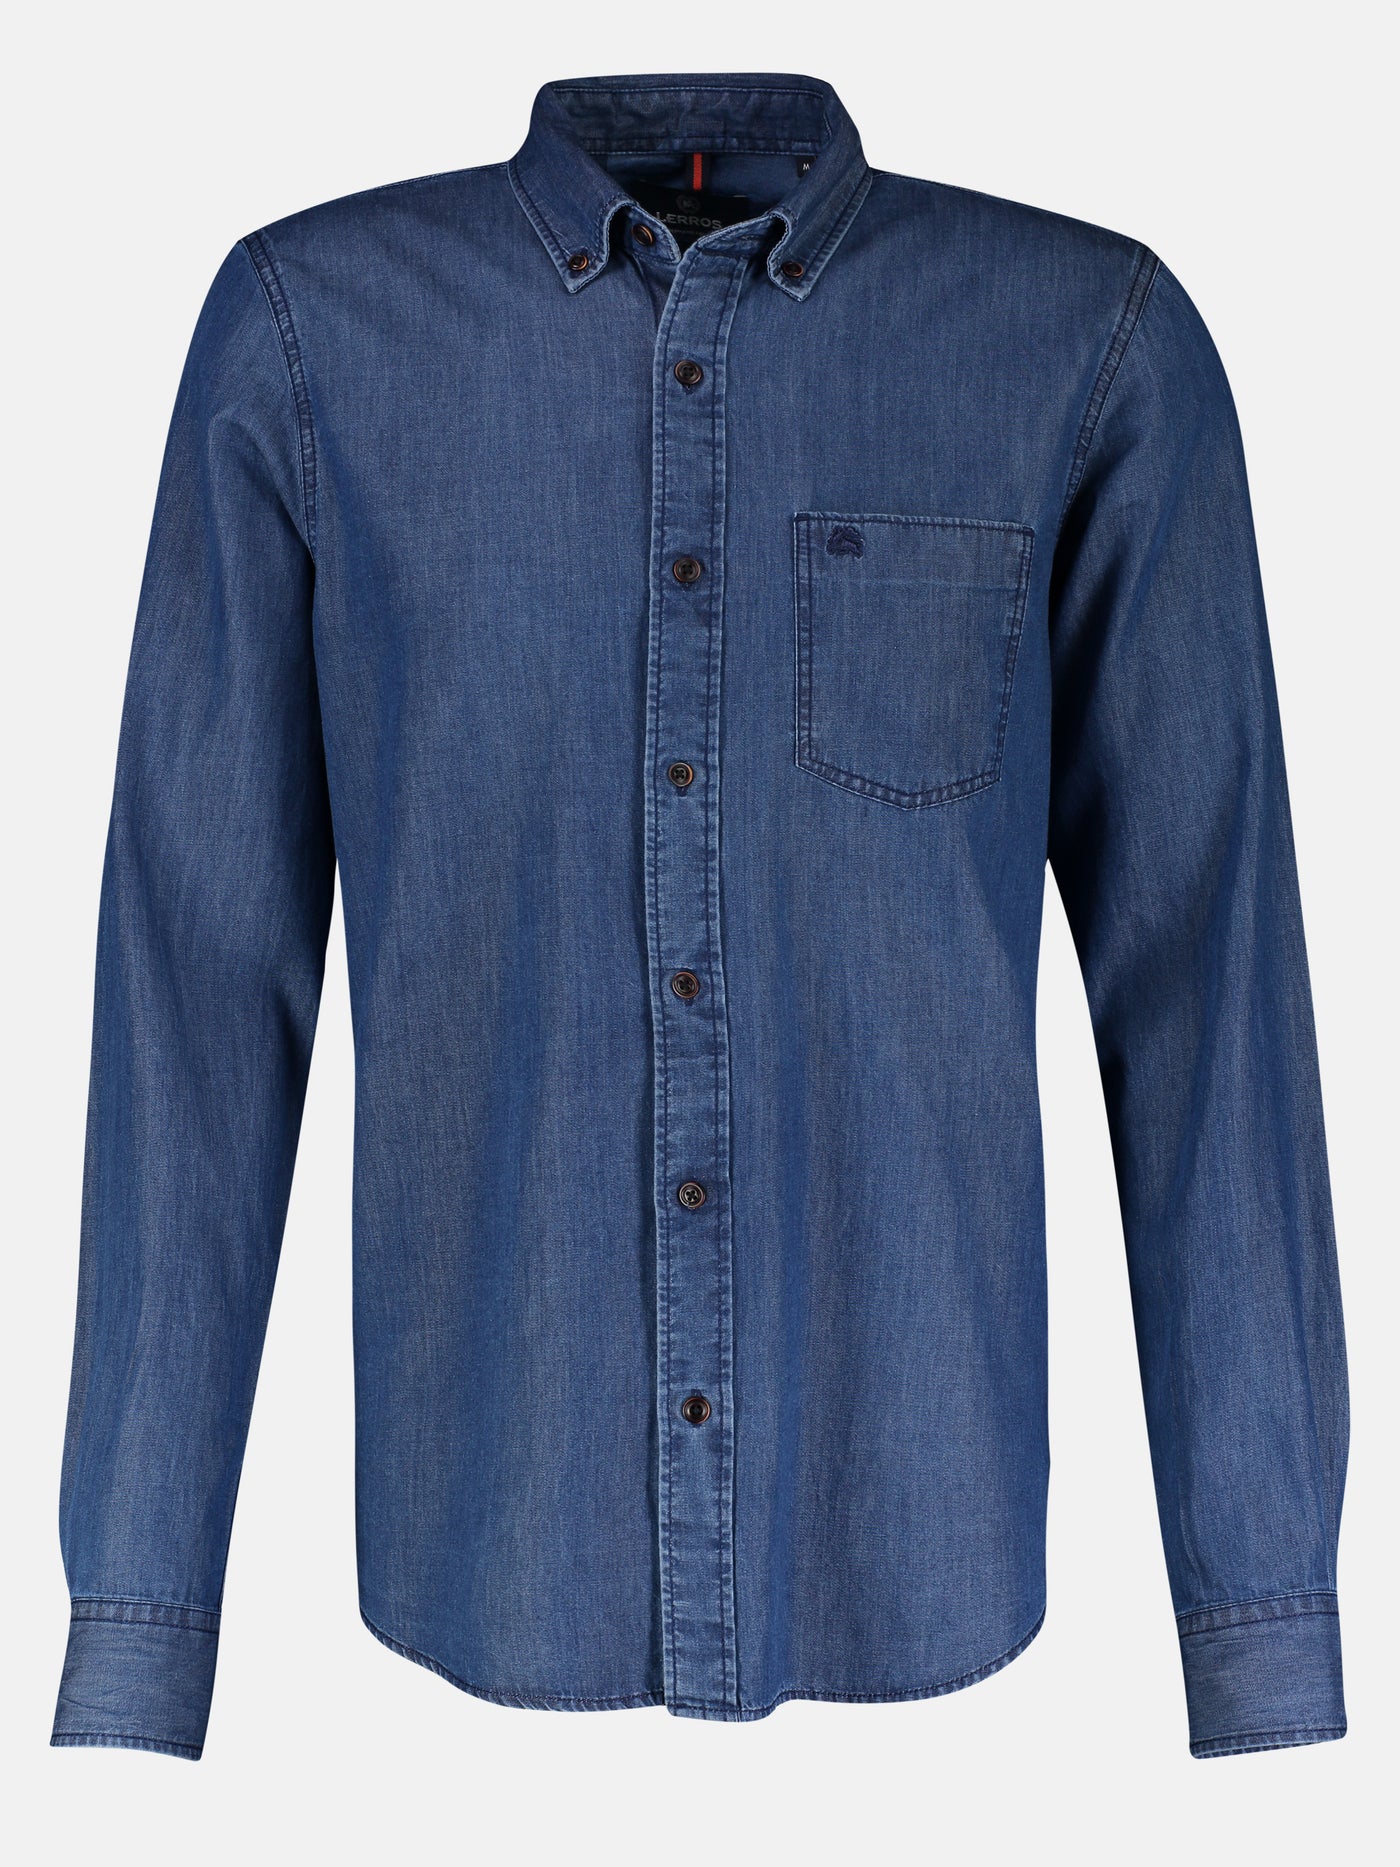 Stylish denim shirt with button-down collar, REGULAR FIT